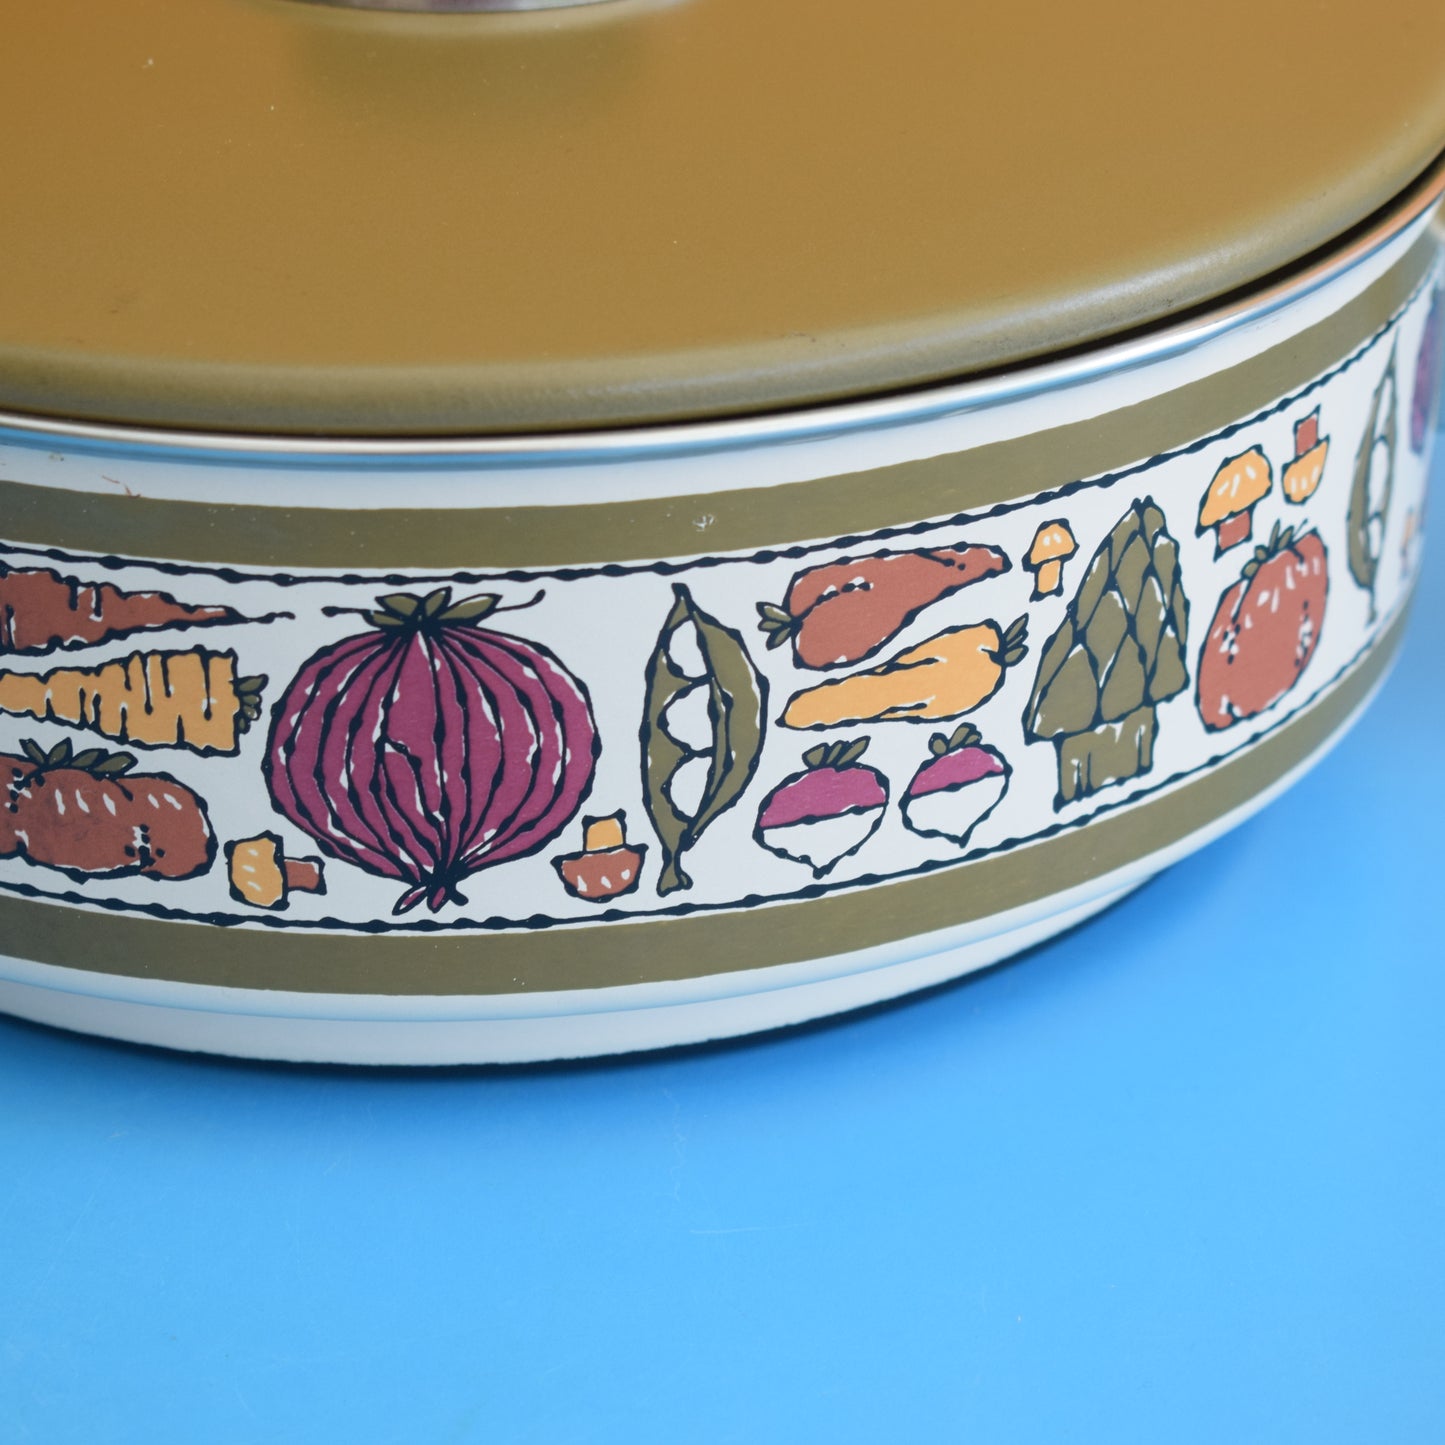 Vintage 1960s Enamel Saucepan - Stylized Vegetables